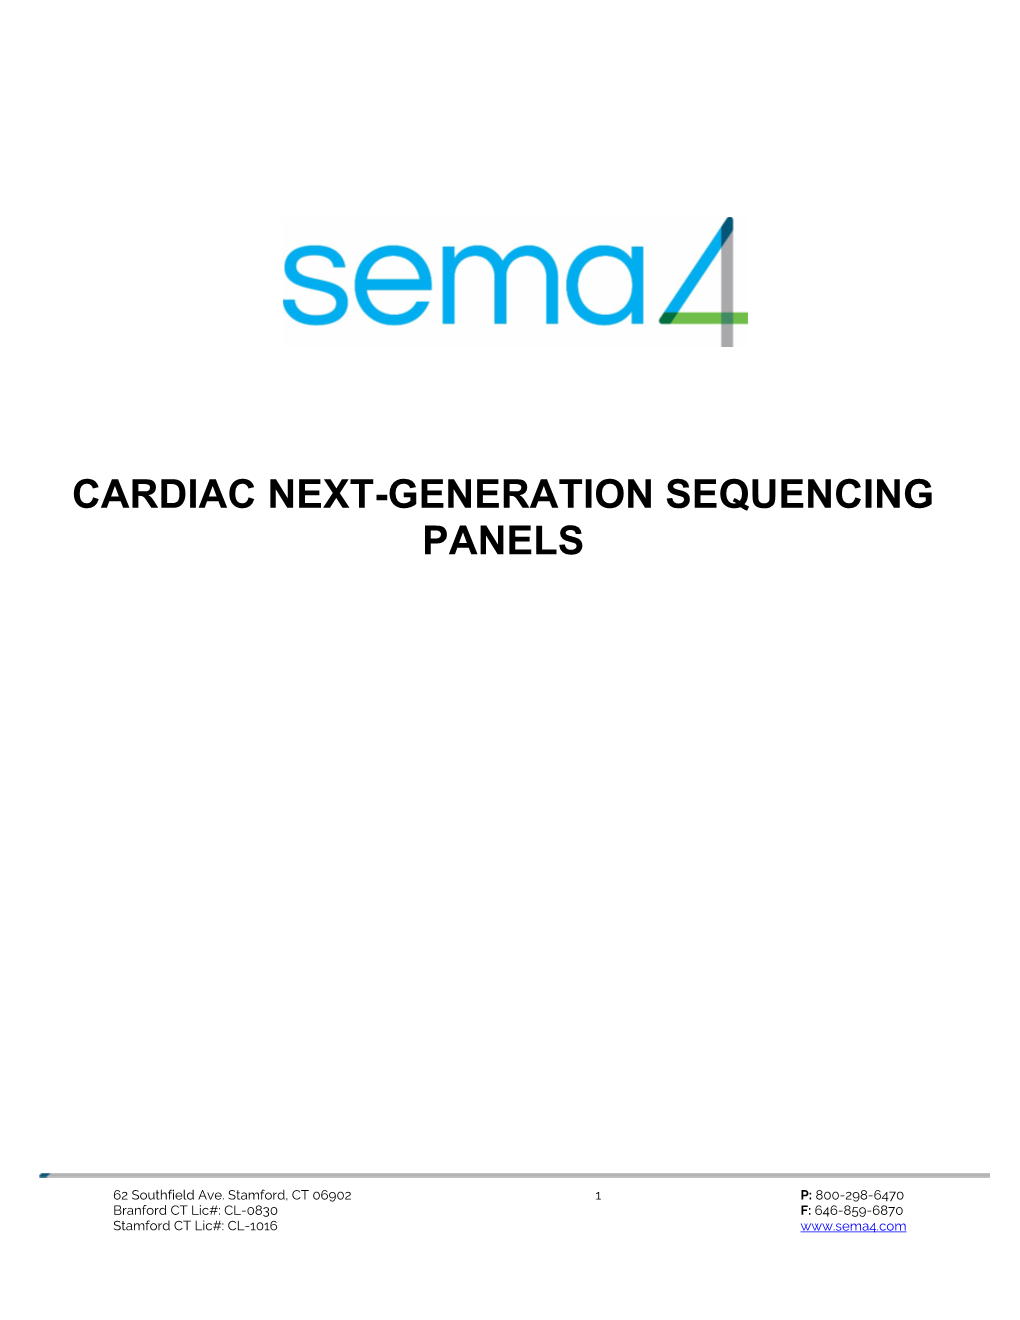 Cardiac Next-Generation Sequencing Panels